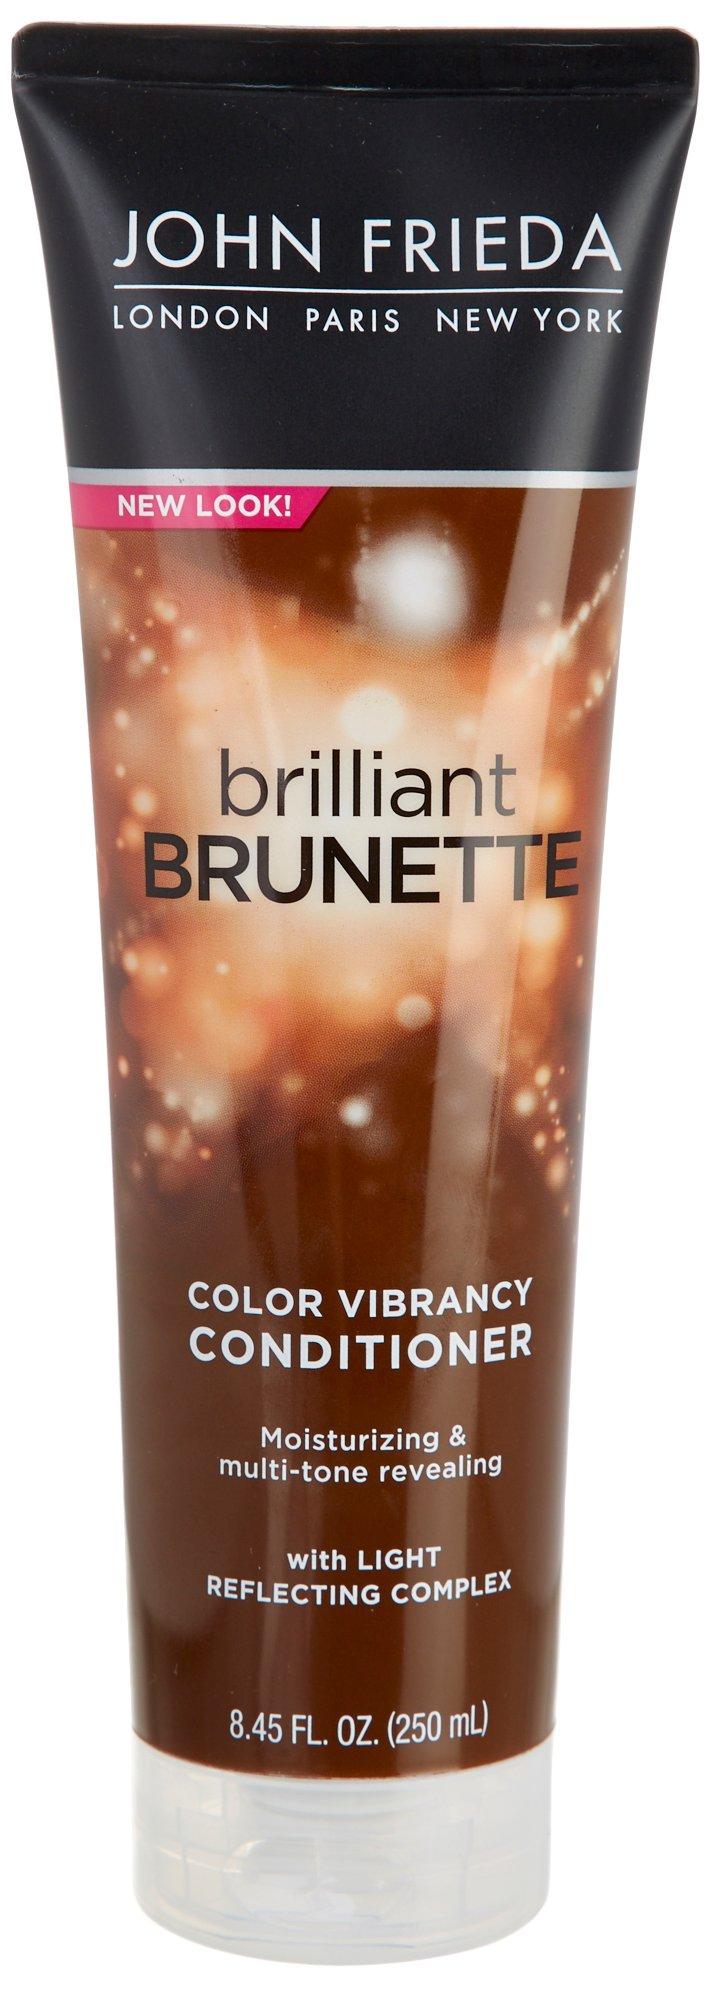 John Frieda Brilliant Brunette Color Vibrancy Conditioner